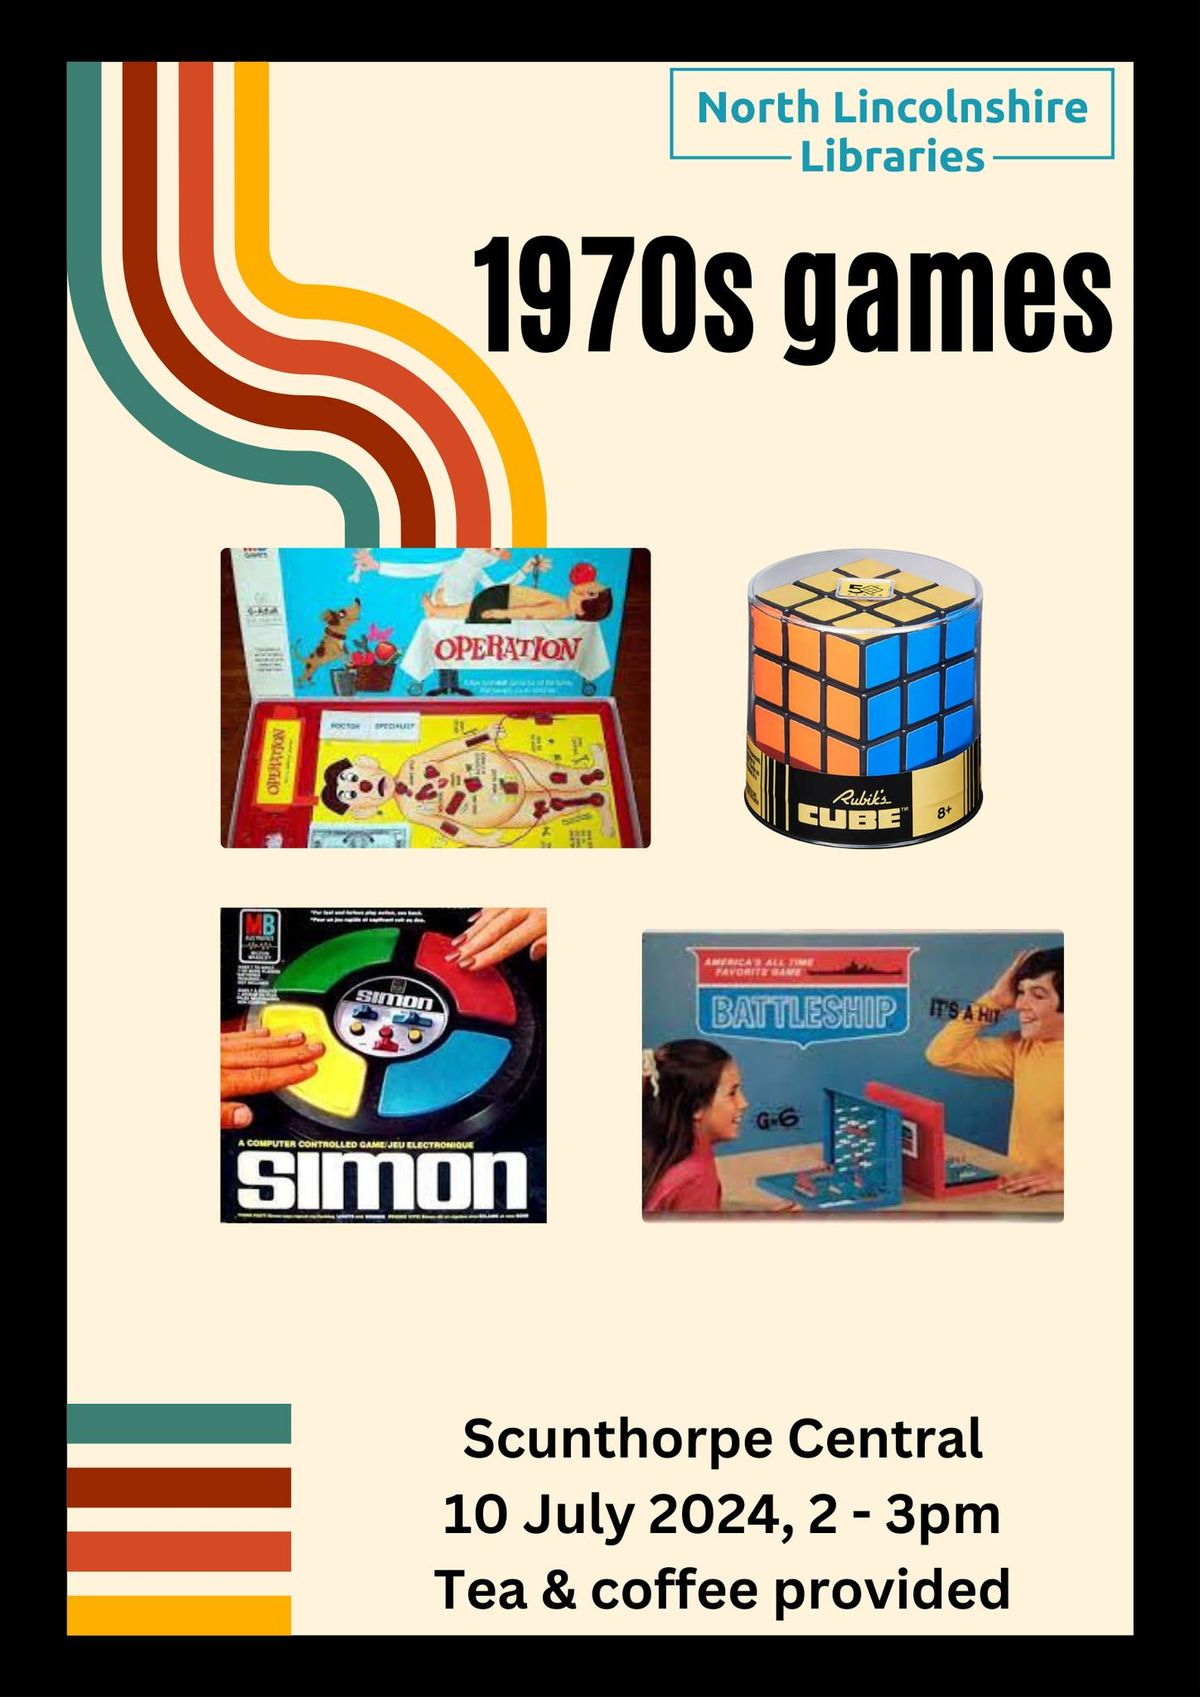 1970s games